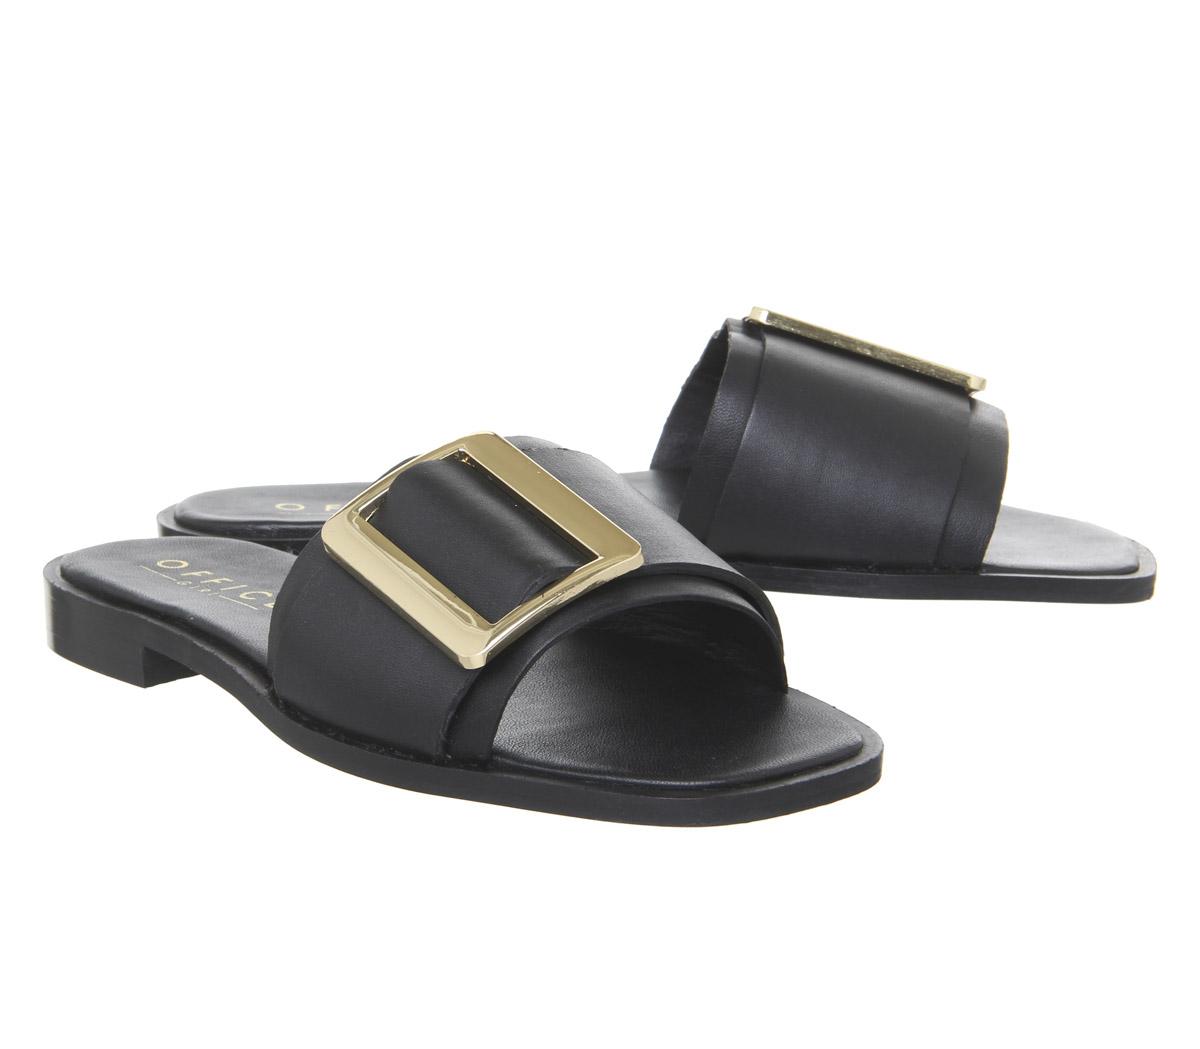 OFFICE Solar Big Buckle Mules Black Leather - Women’s Sandals